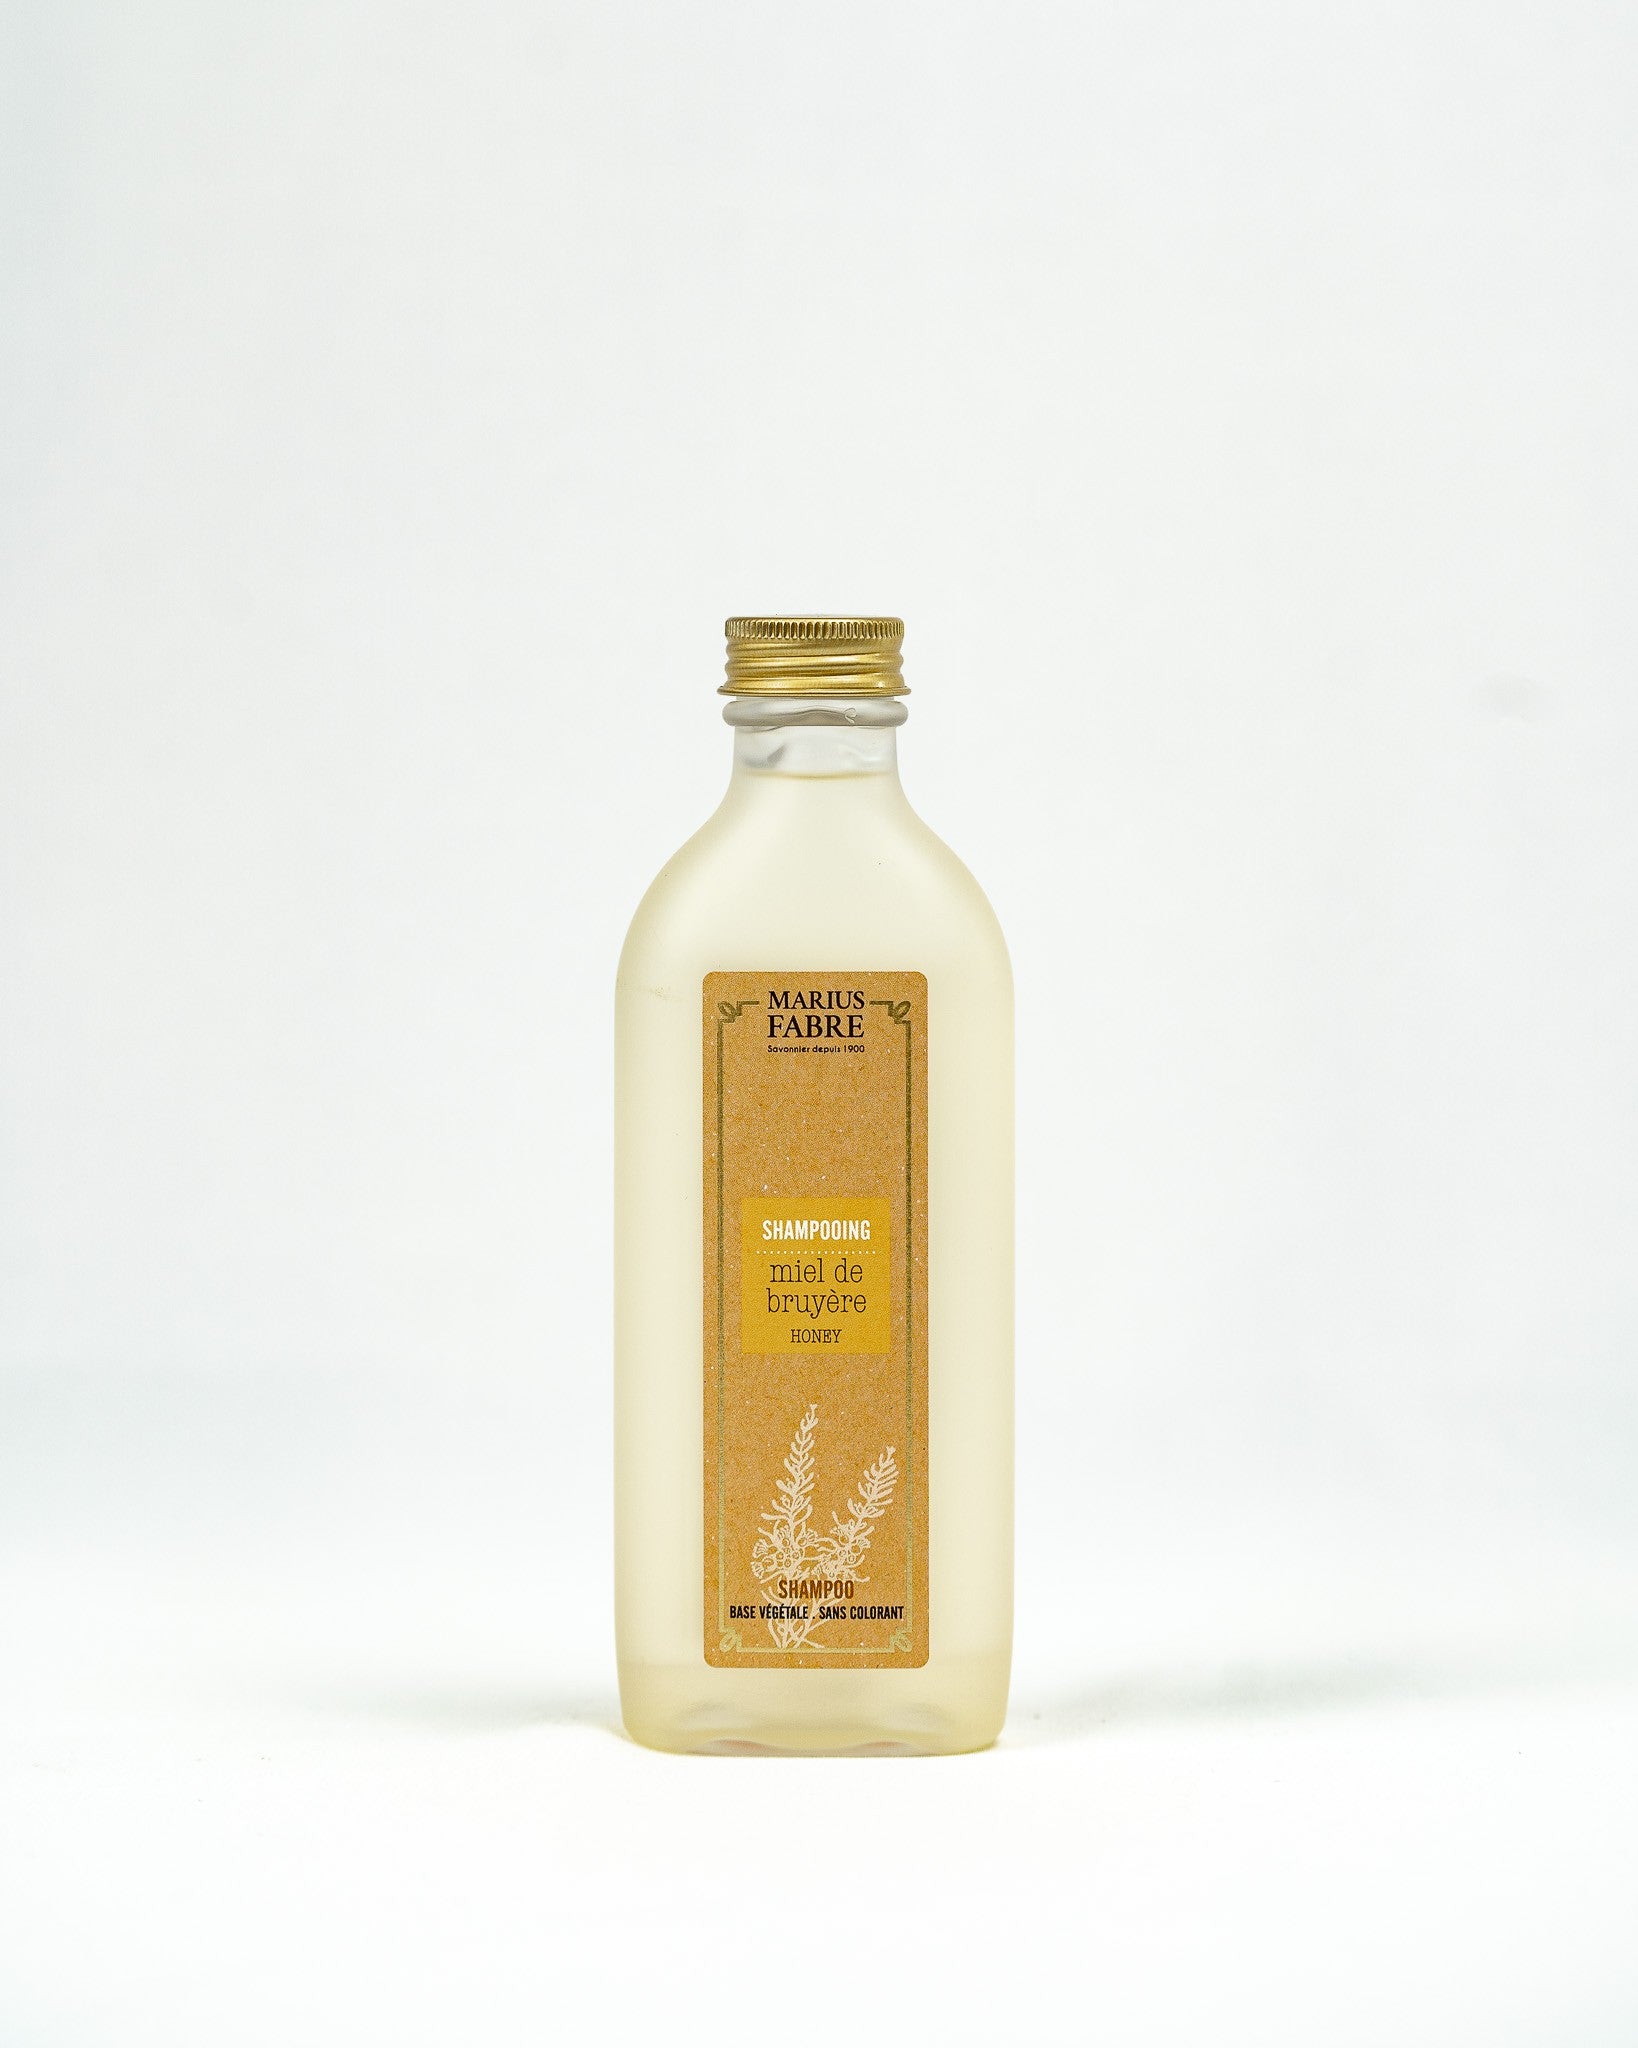 Shampoo mit Heidehonig-Duft, 230 ml